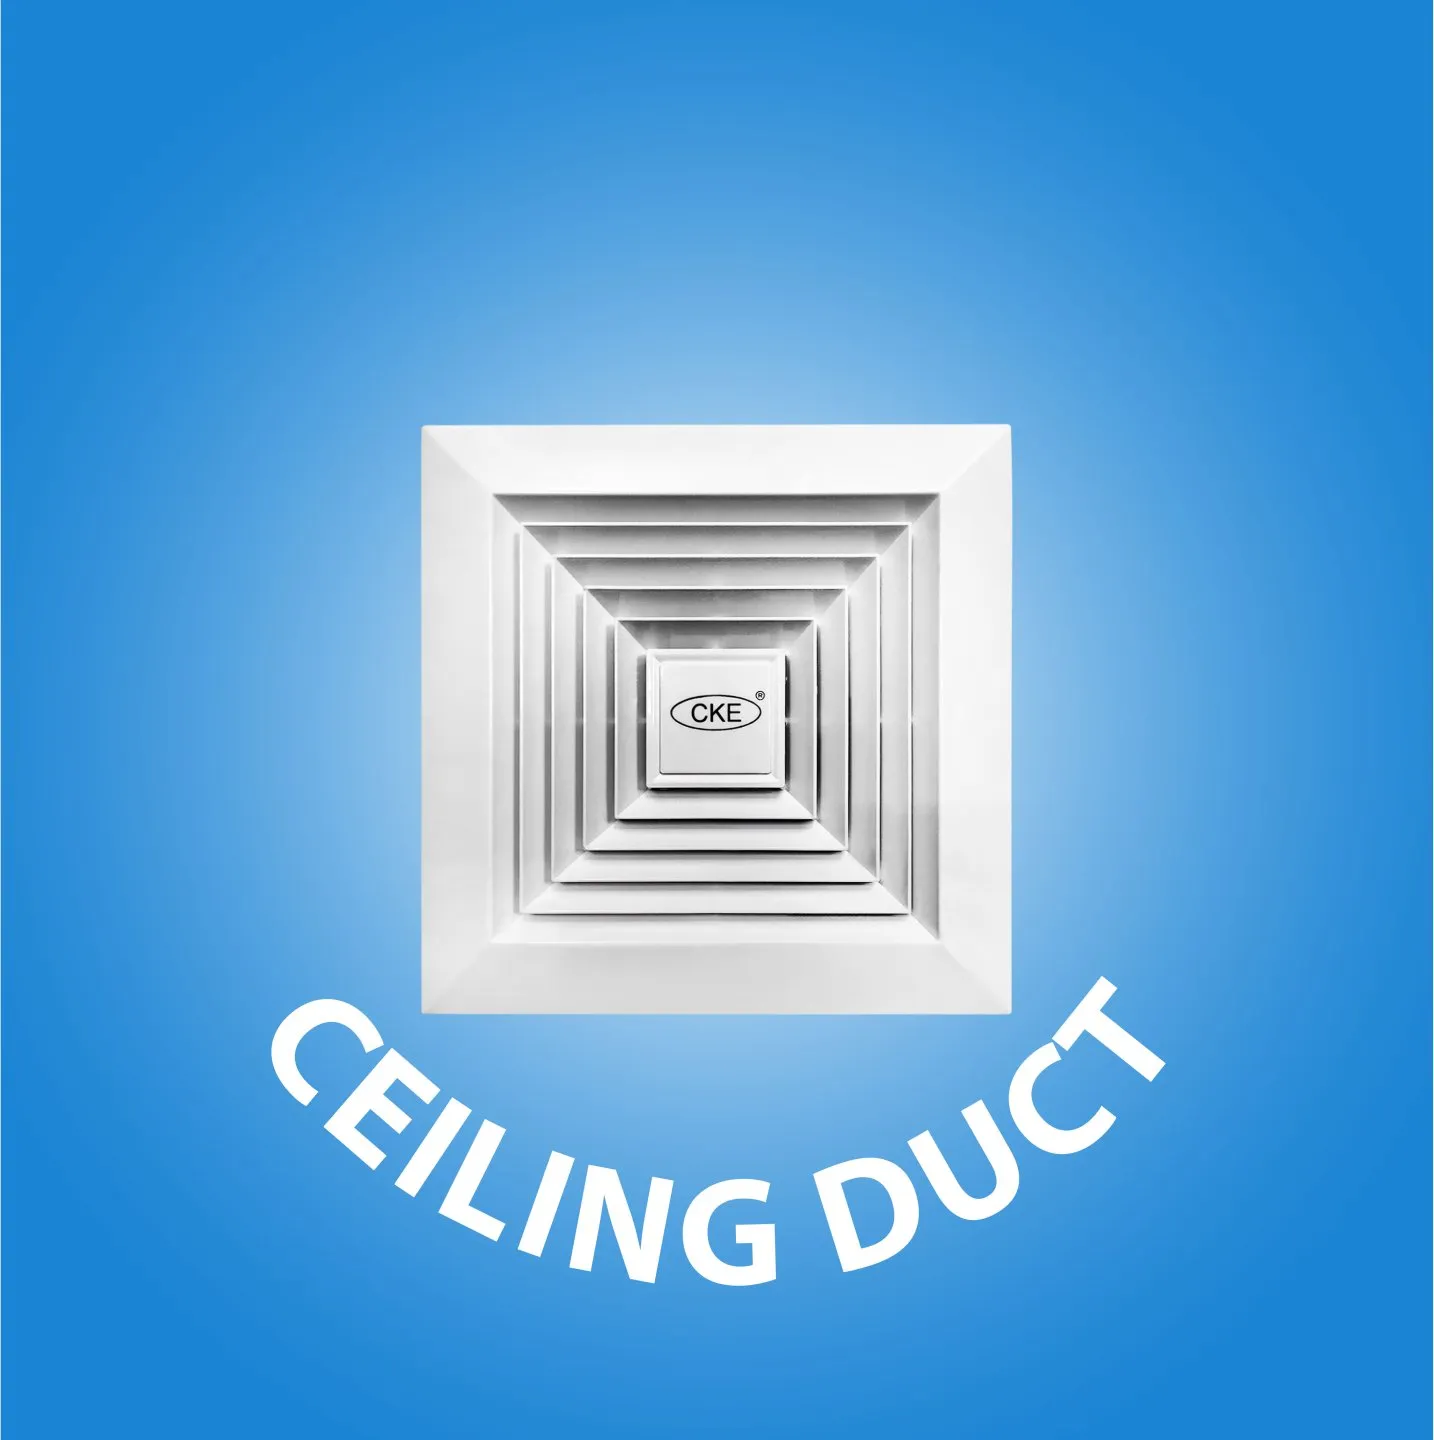  Ceiling Duct cover kategori website 10